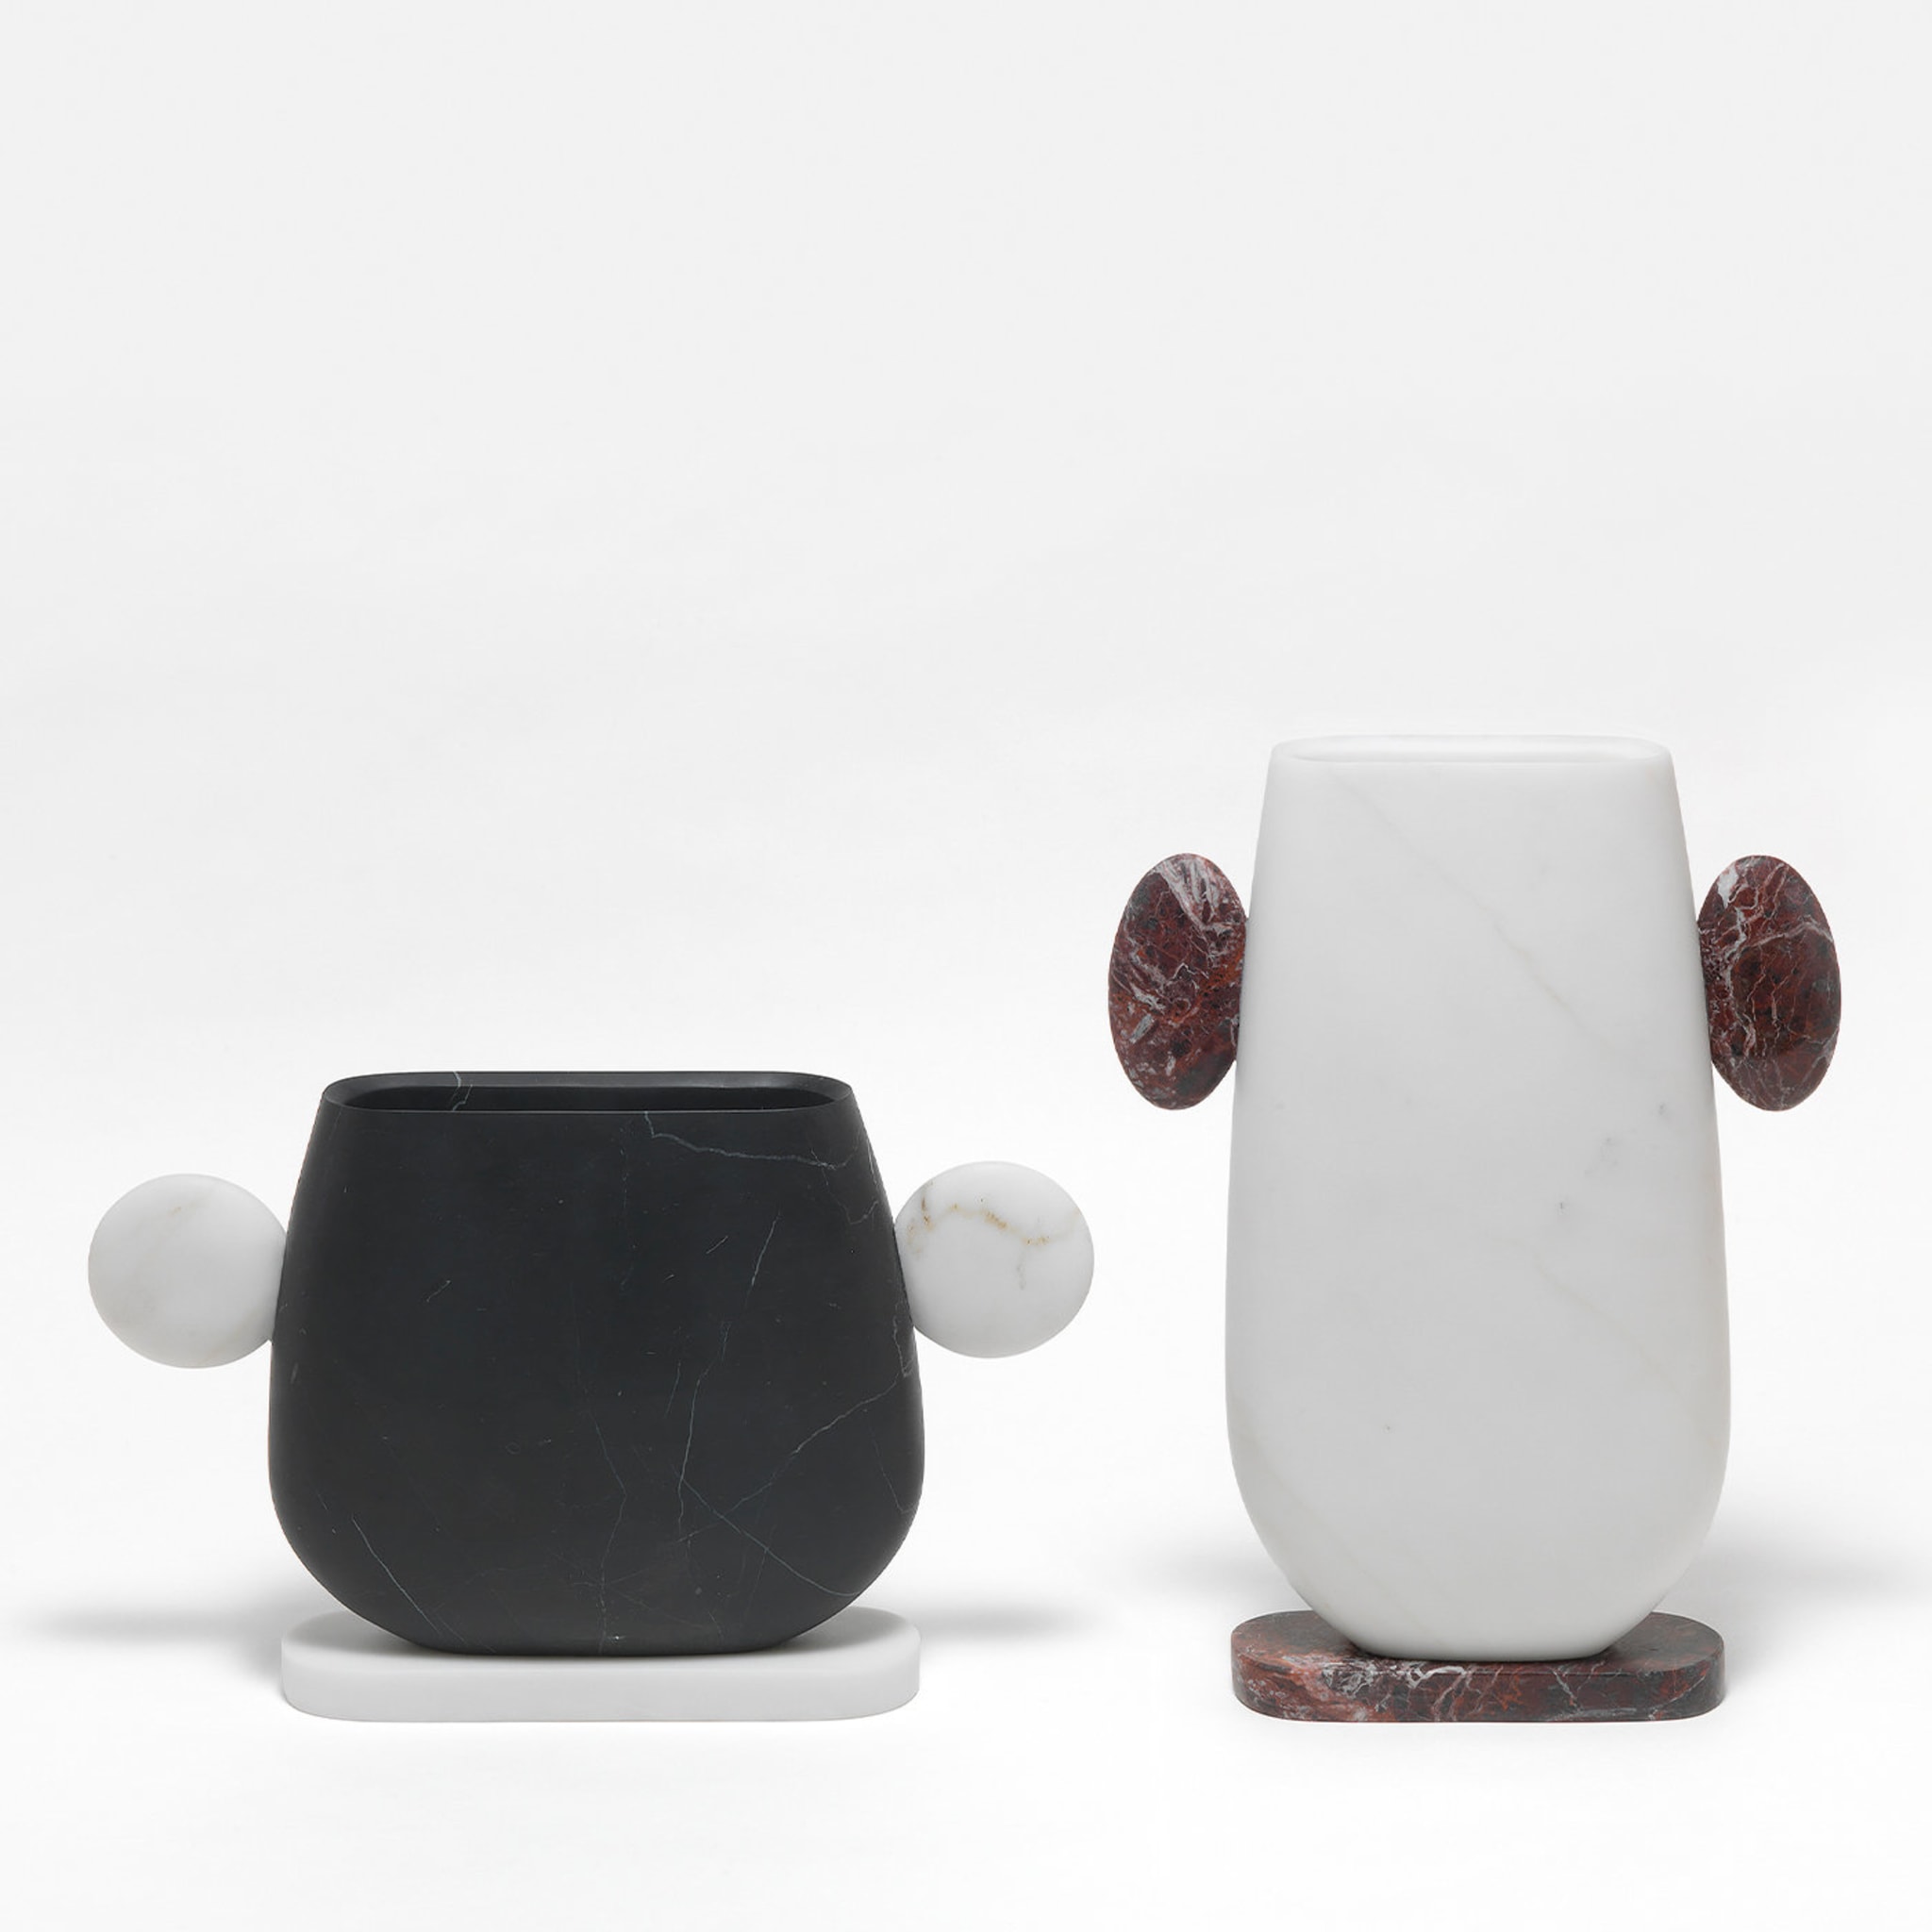 Tacca Black Marquina/White Michelangelo Vase by Matteo Cibic #2 - Alternative view 1